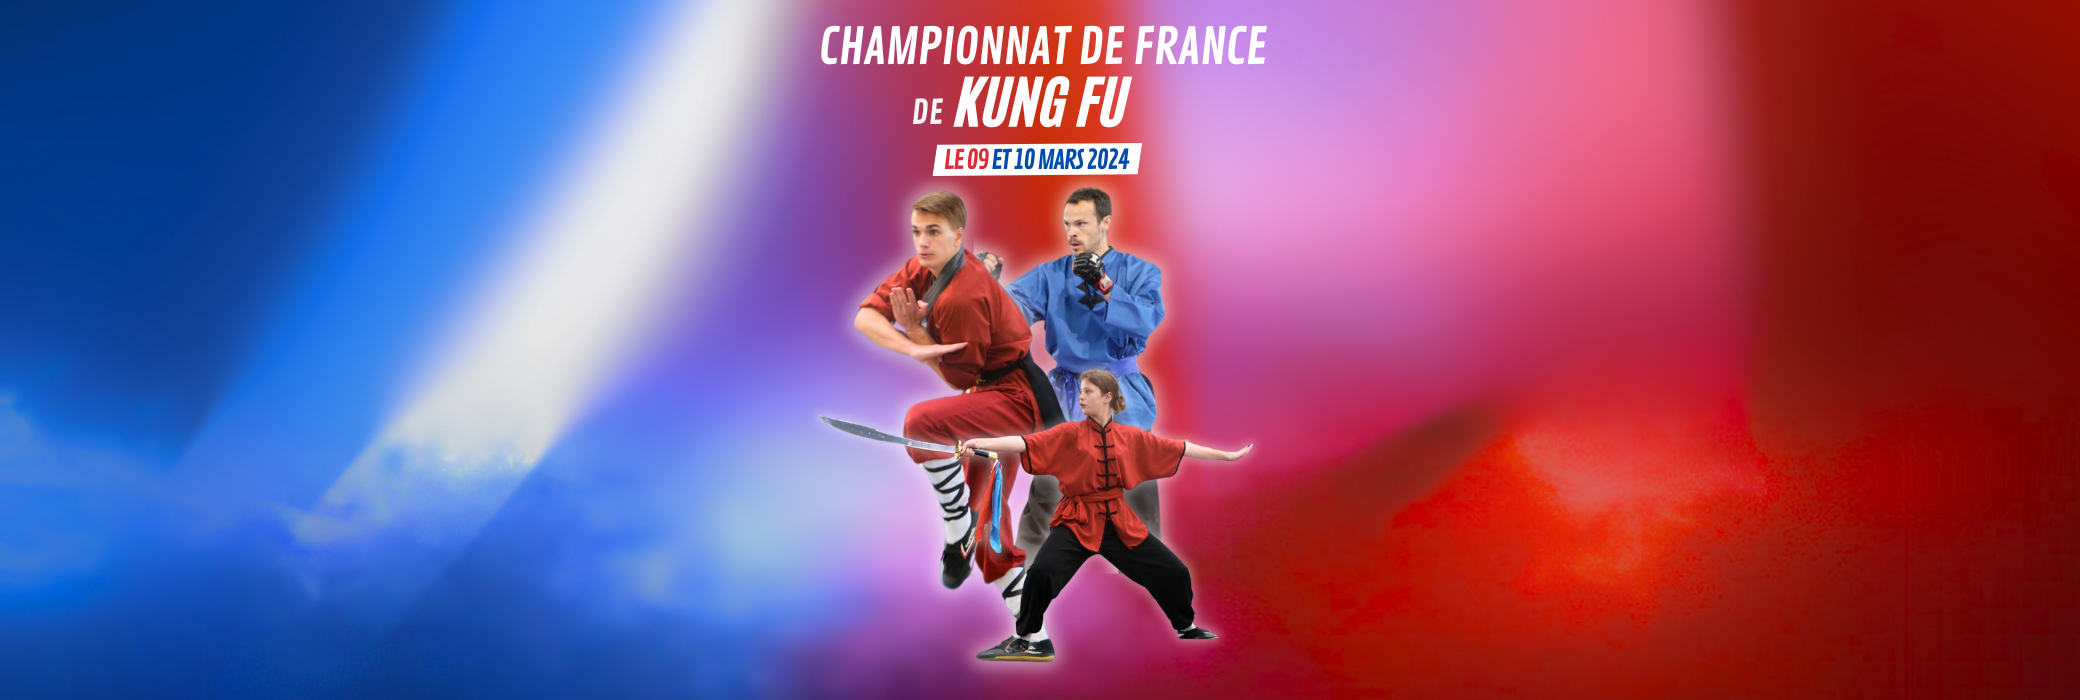 championnat de france kung fu